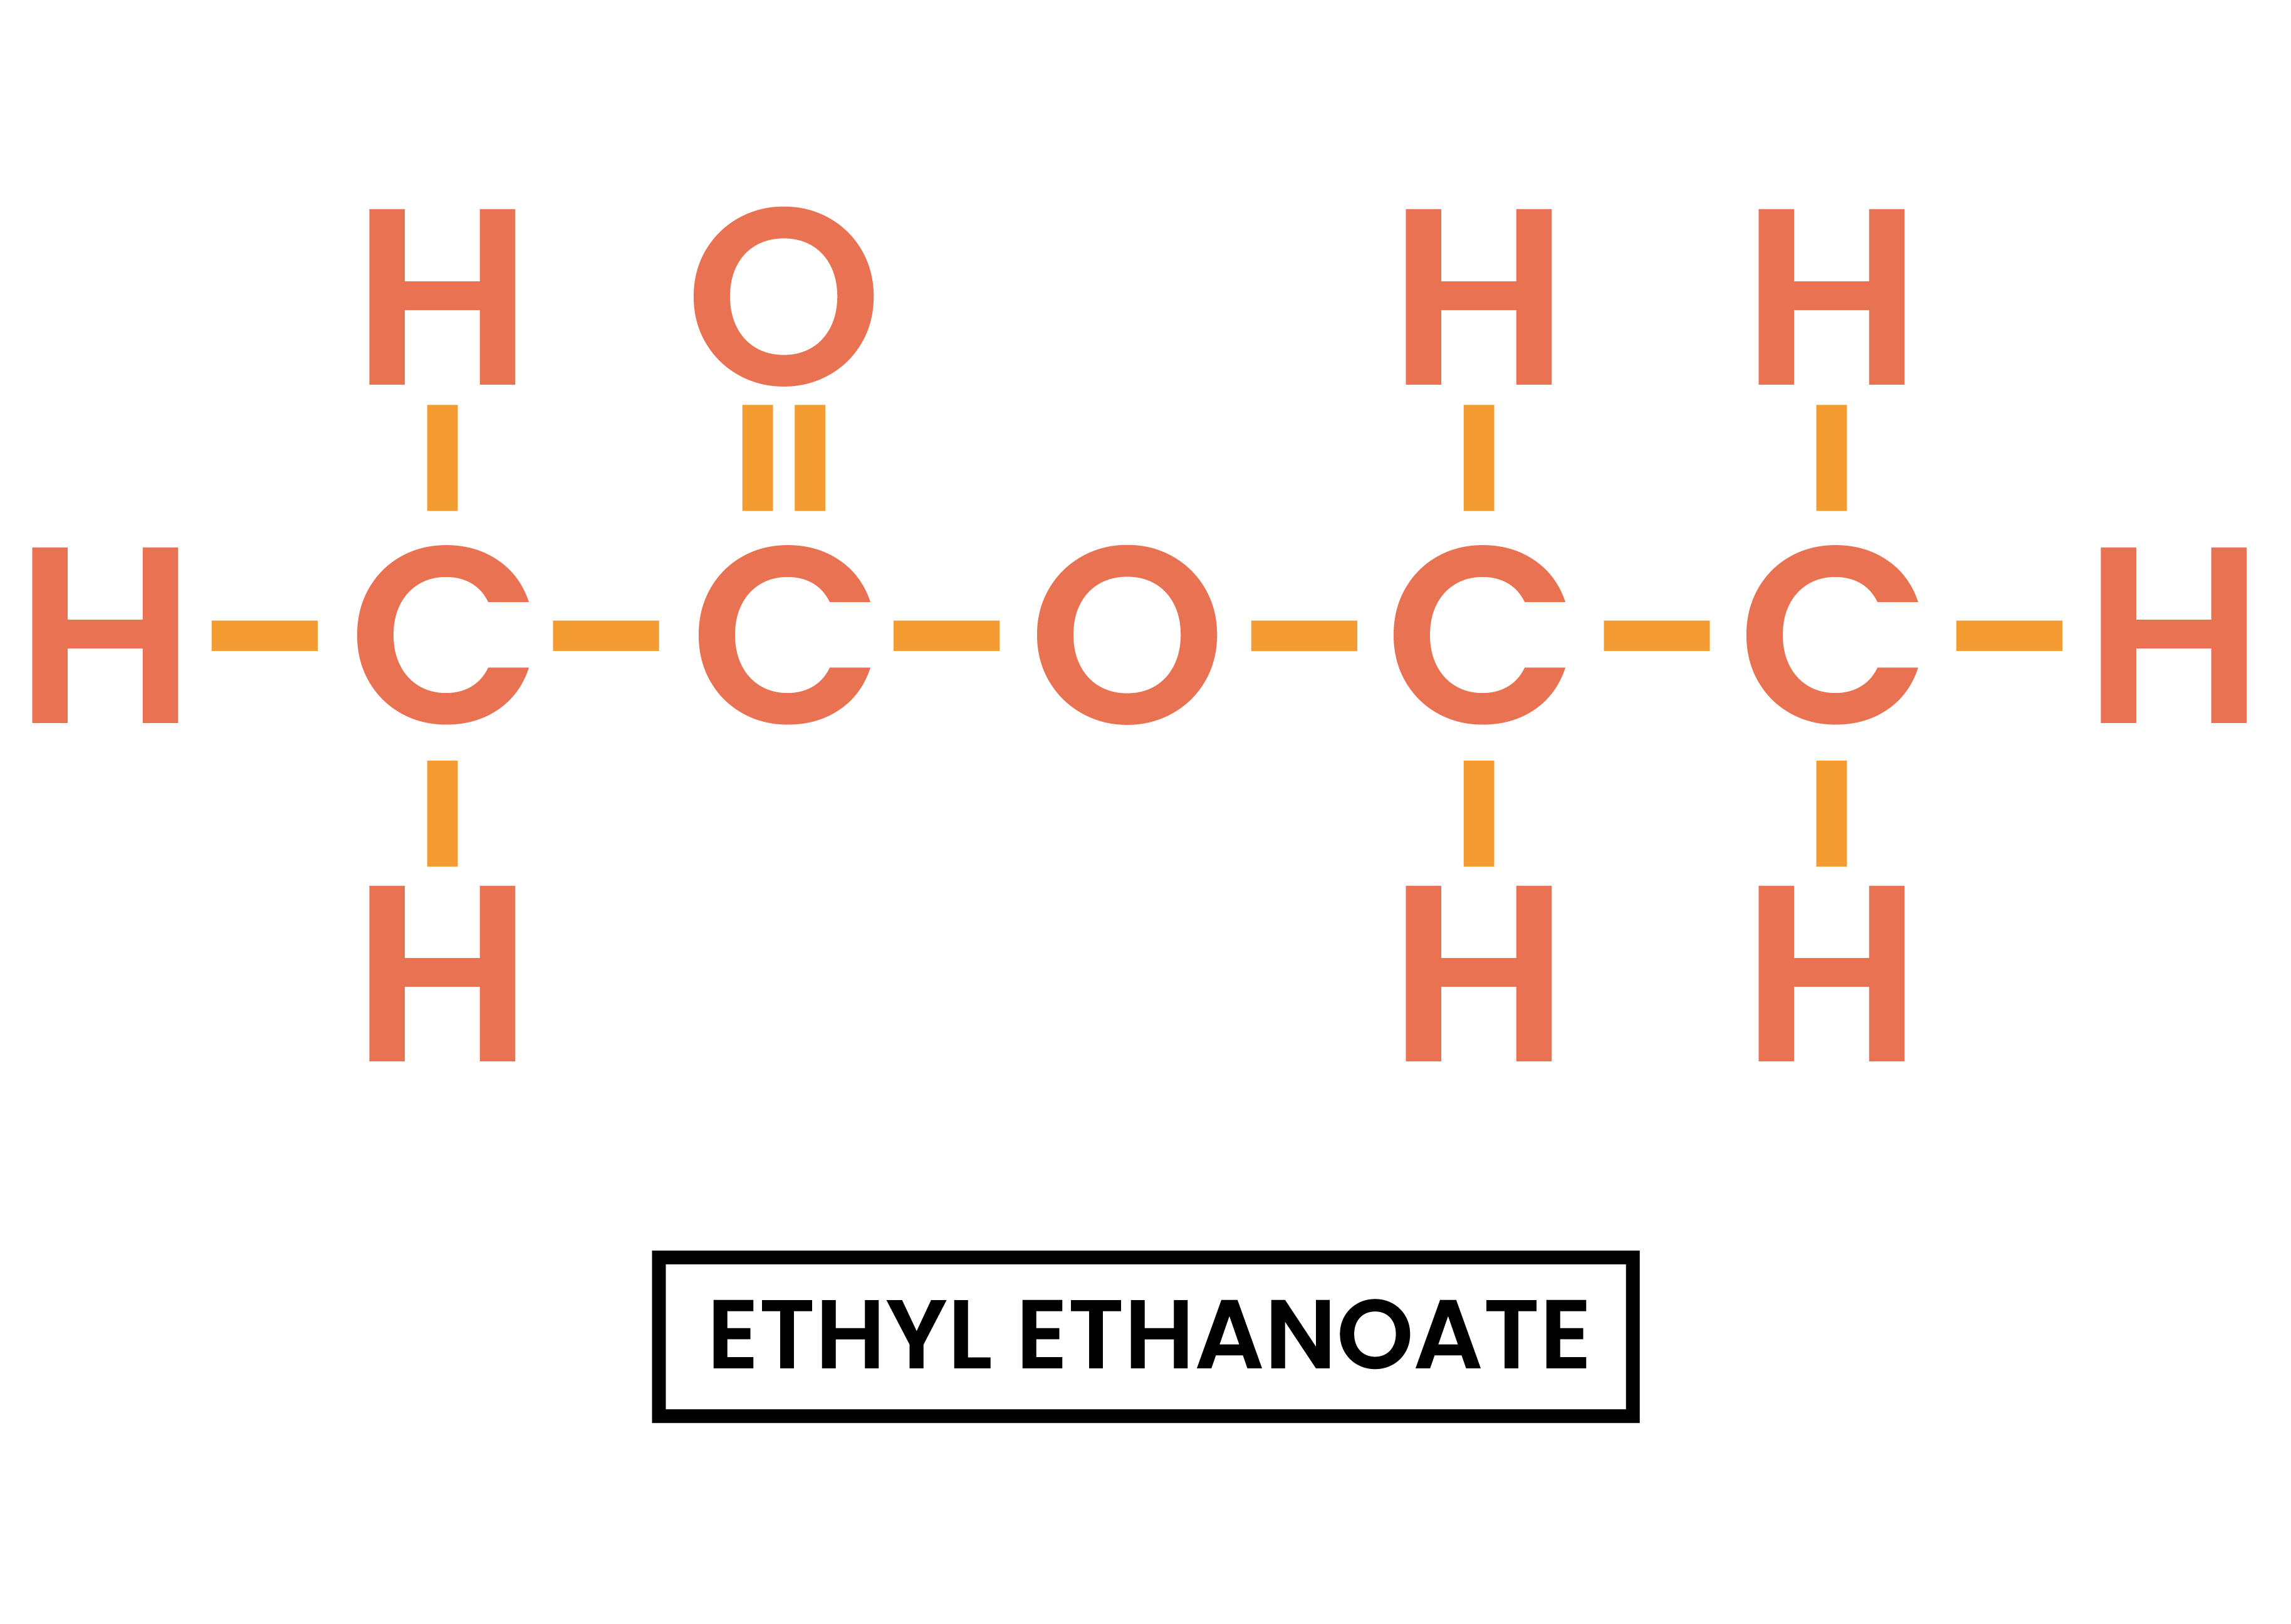 edexcel_igcse_chemistry_topic 27_esters_002_production of esters reaction formula ethyl ethanoate part